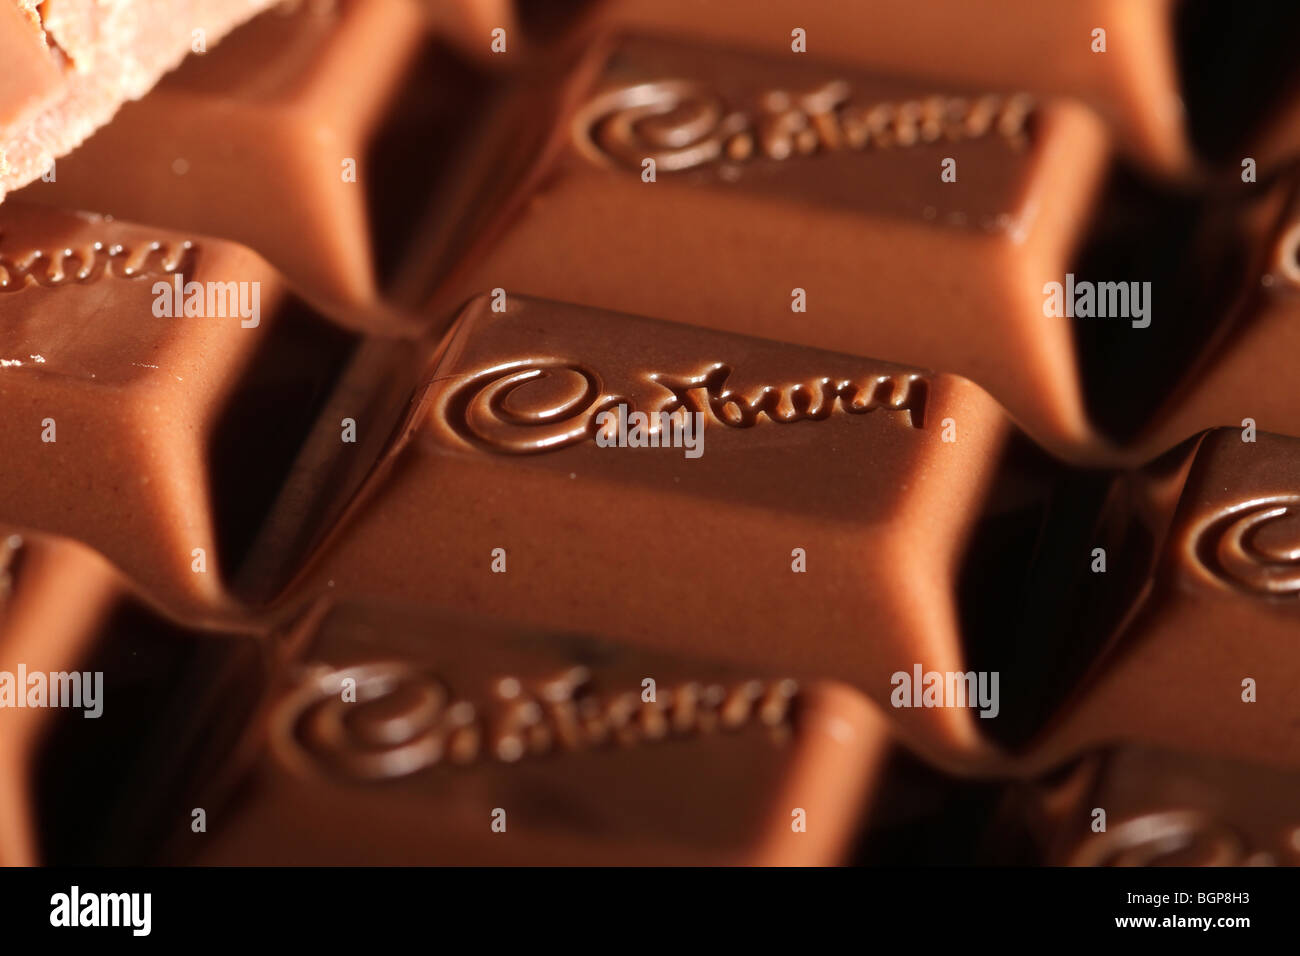 Cadbury chocolate bar hi-res stock photography and images - Alamy